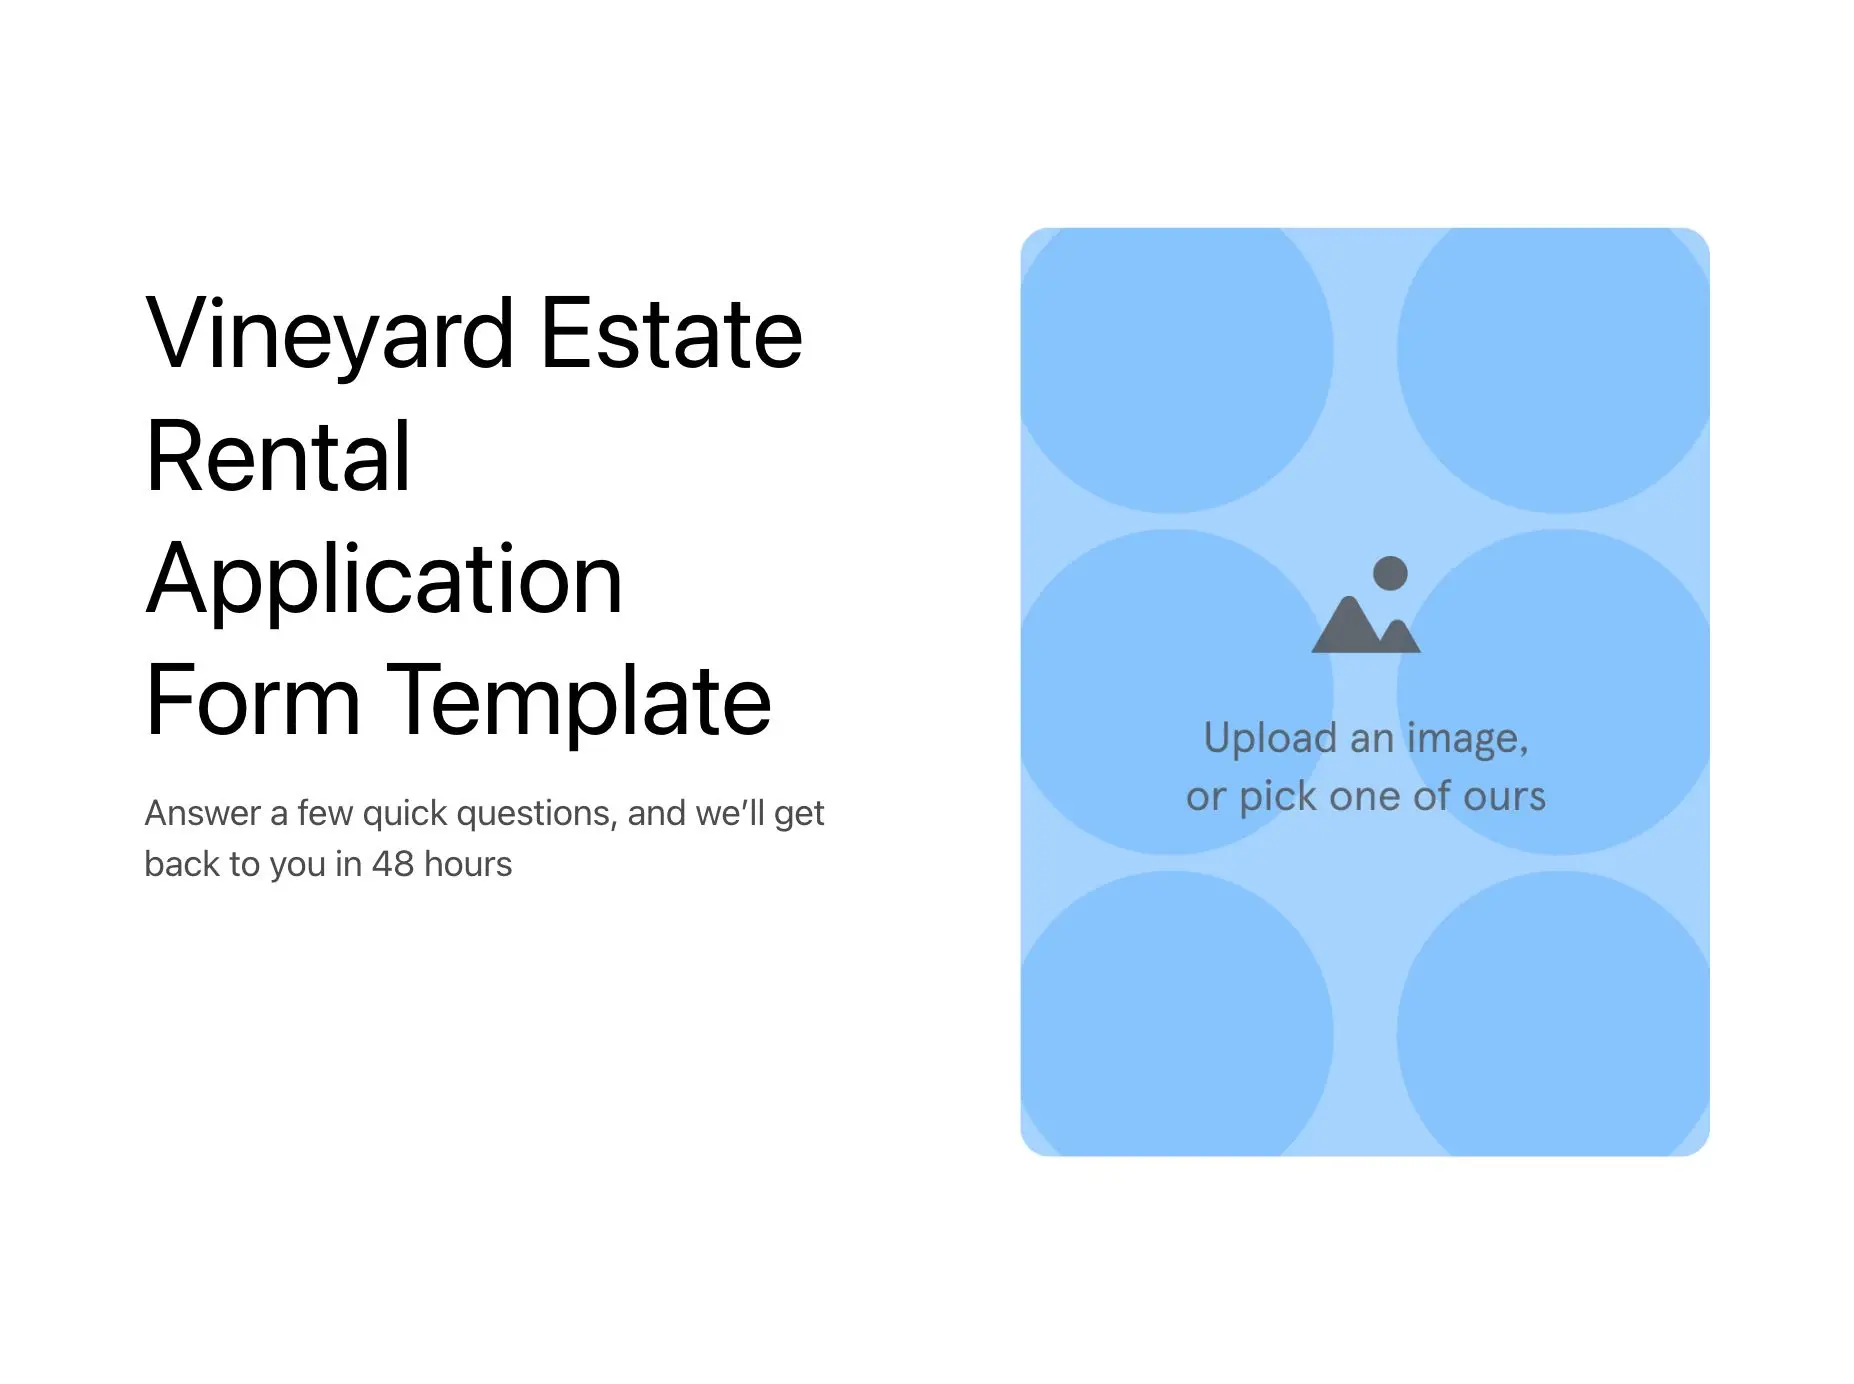 Vineyard Estate Rental Application Form Template Hero